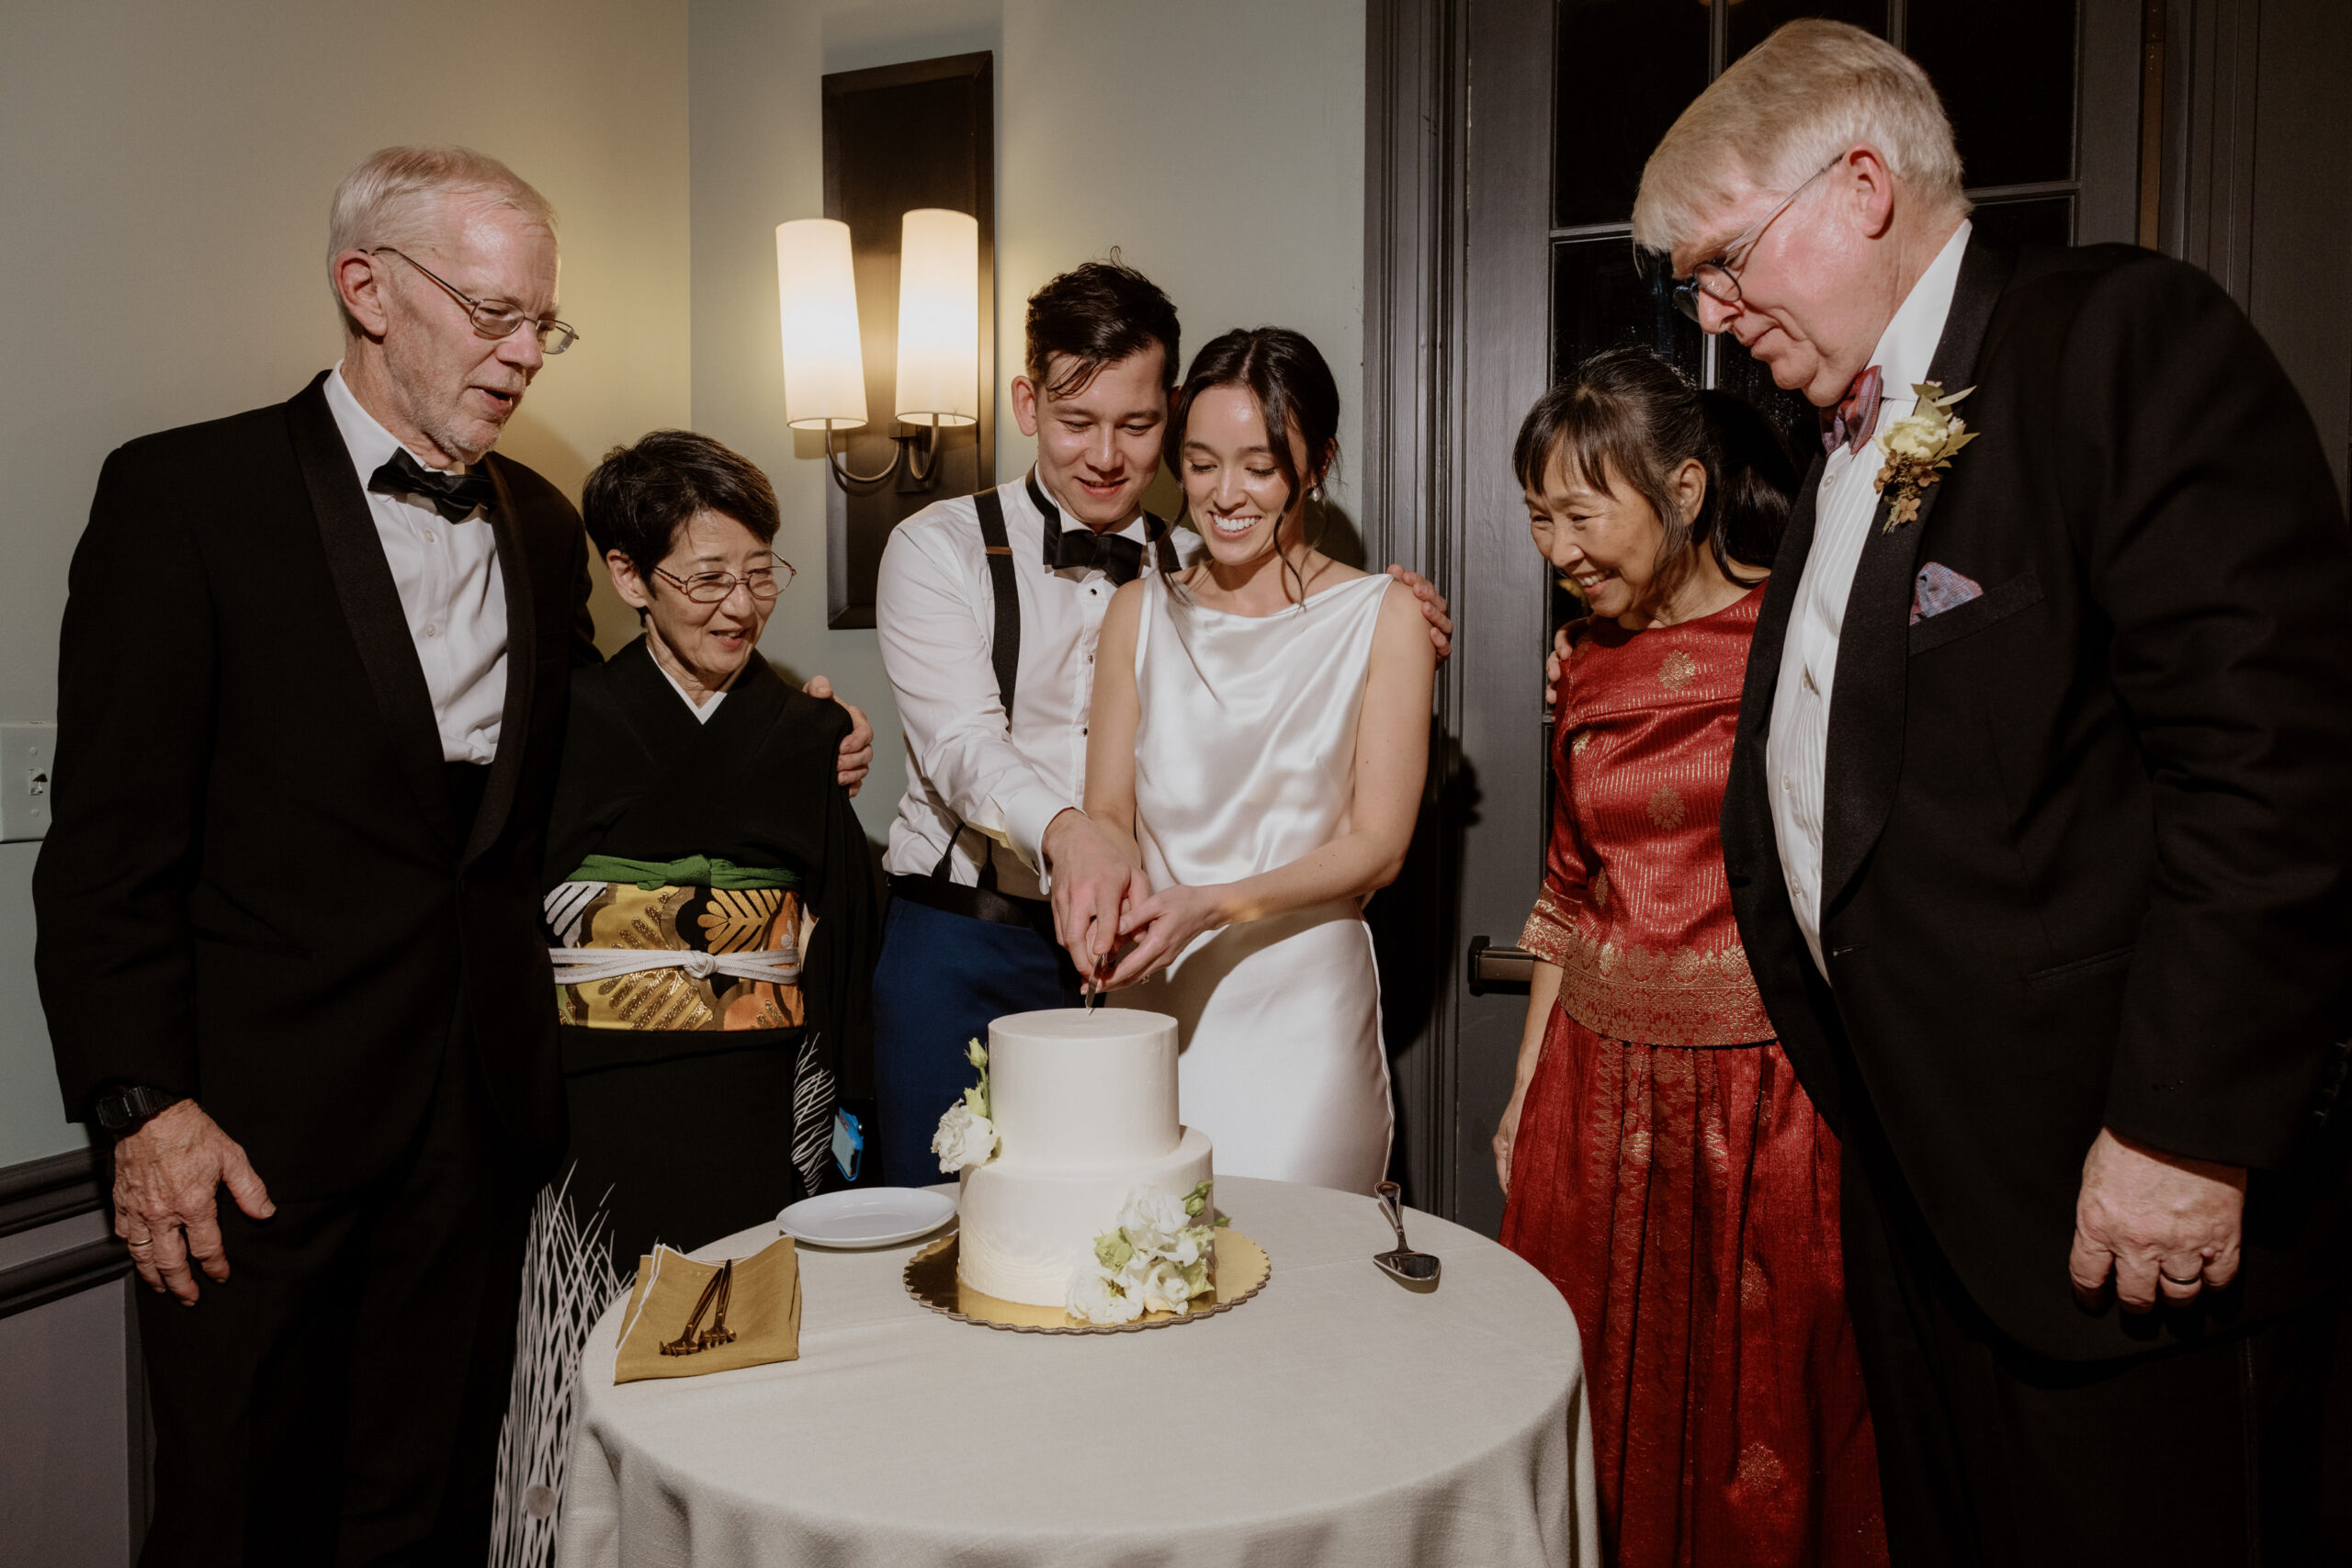 Wedding cake cutting ceremony at Troutbeck, New York. Photojournalistic wedding photography image by Jenny Fu Studio